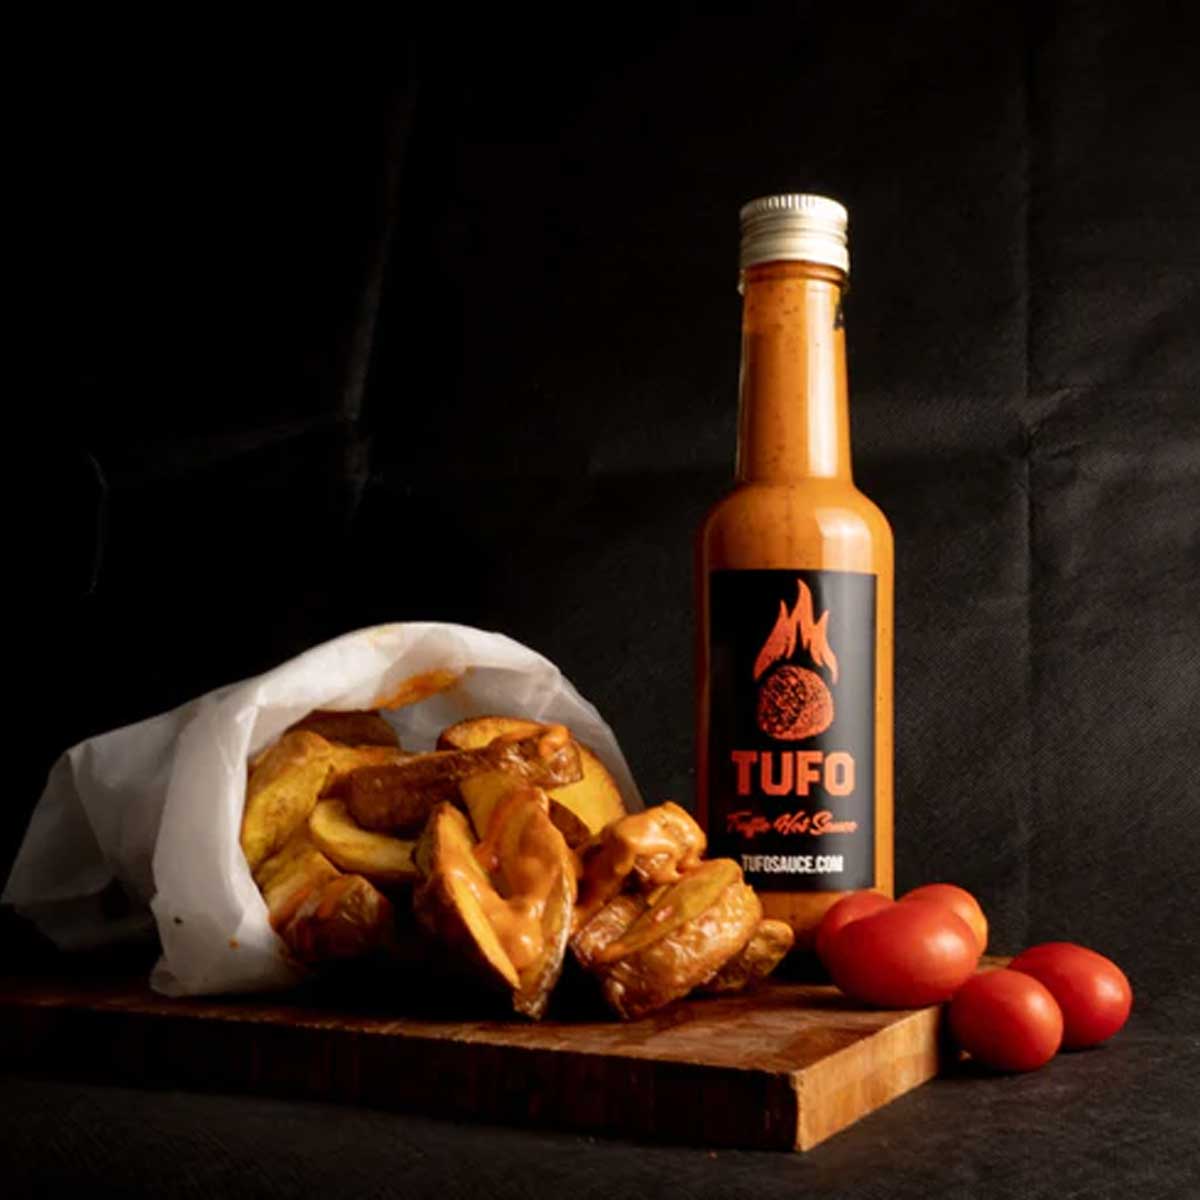 TUFO Truffle Hot Grillsauce